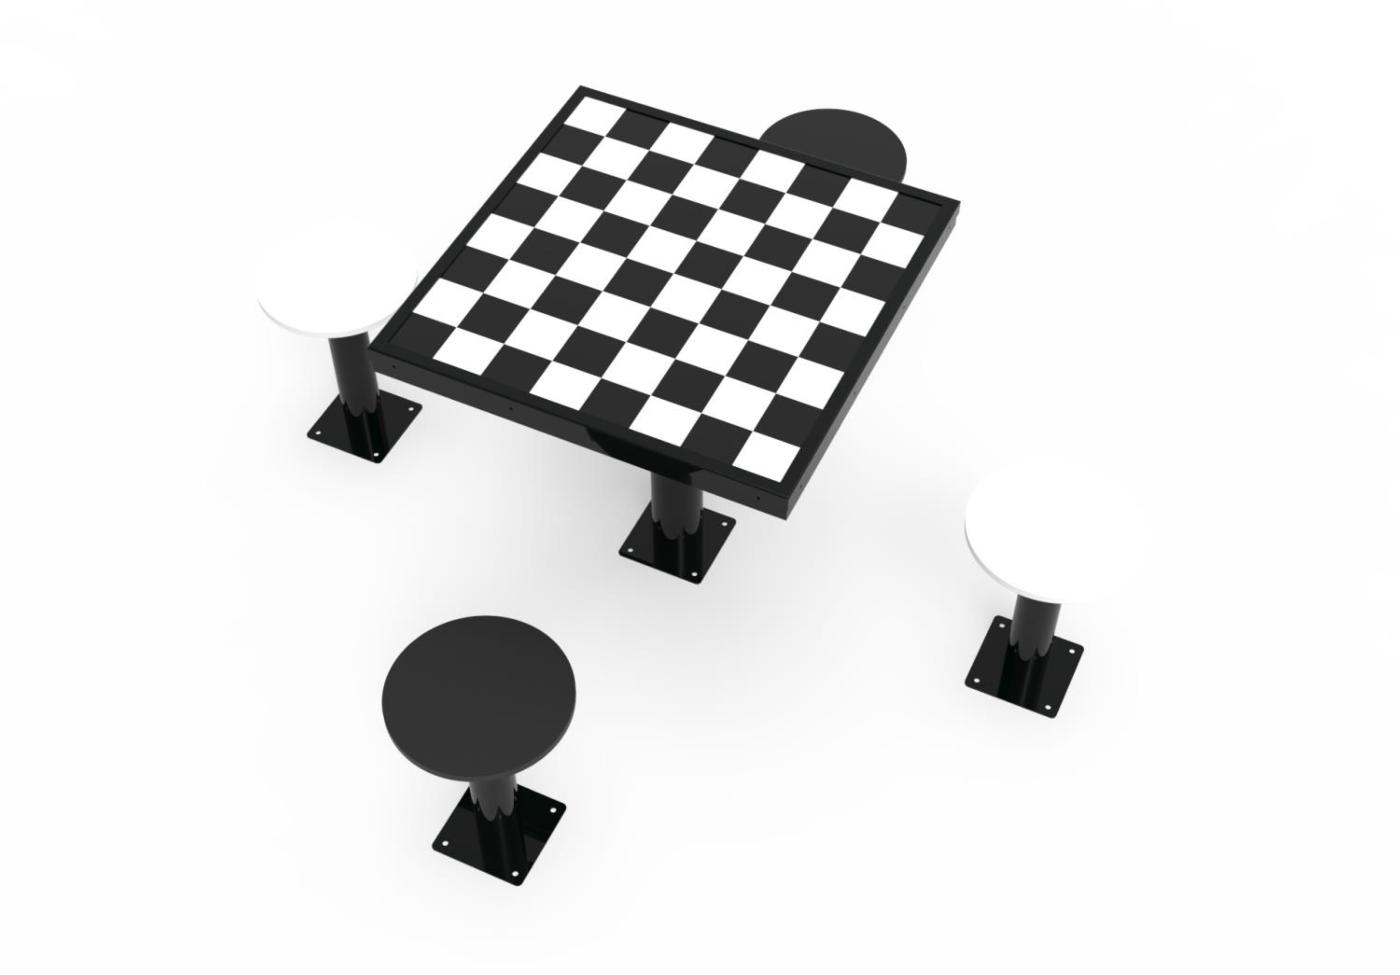 Mesa xadrez exterior